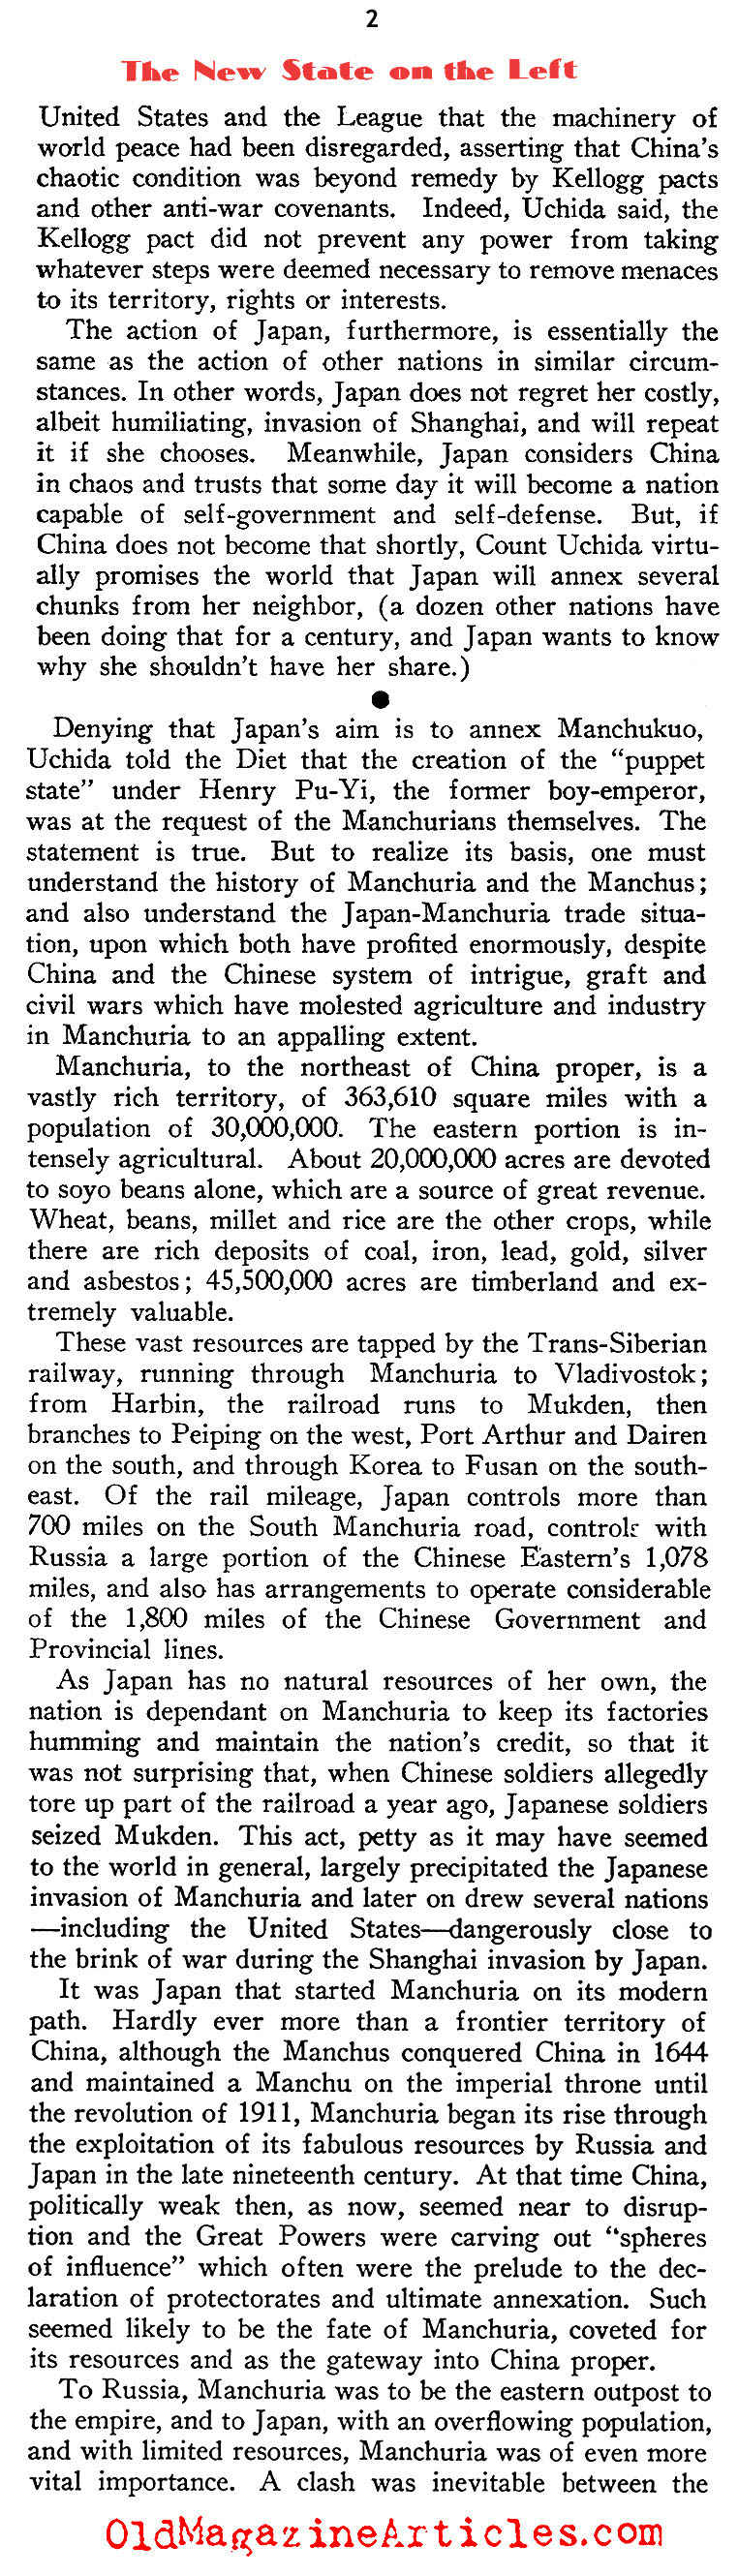 Manchukuo (New Outlook Magazine, 1932)